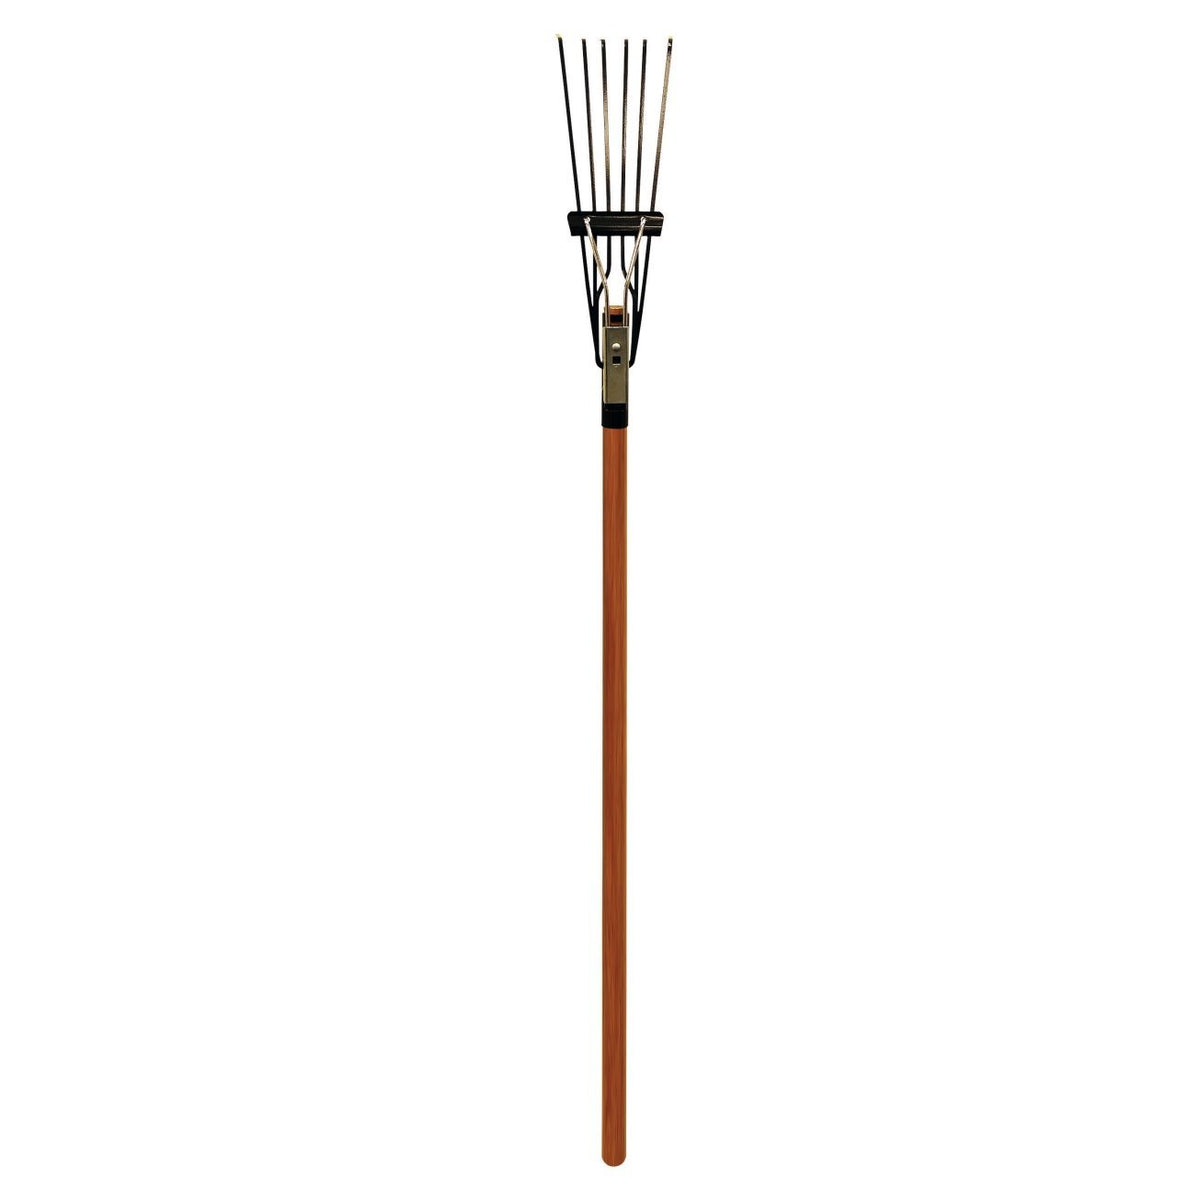 buy rakes & gardening tools at cheap rate in bulk. wholesale & retail lawn & garden maintenance goods store.